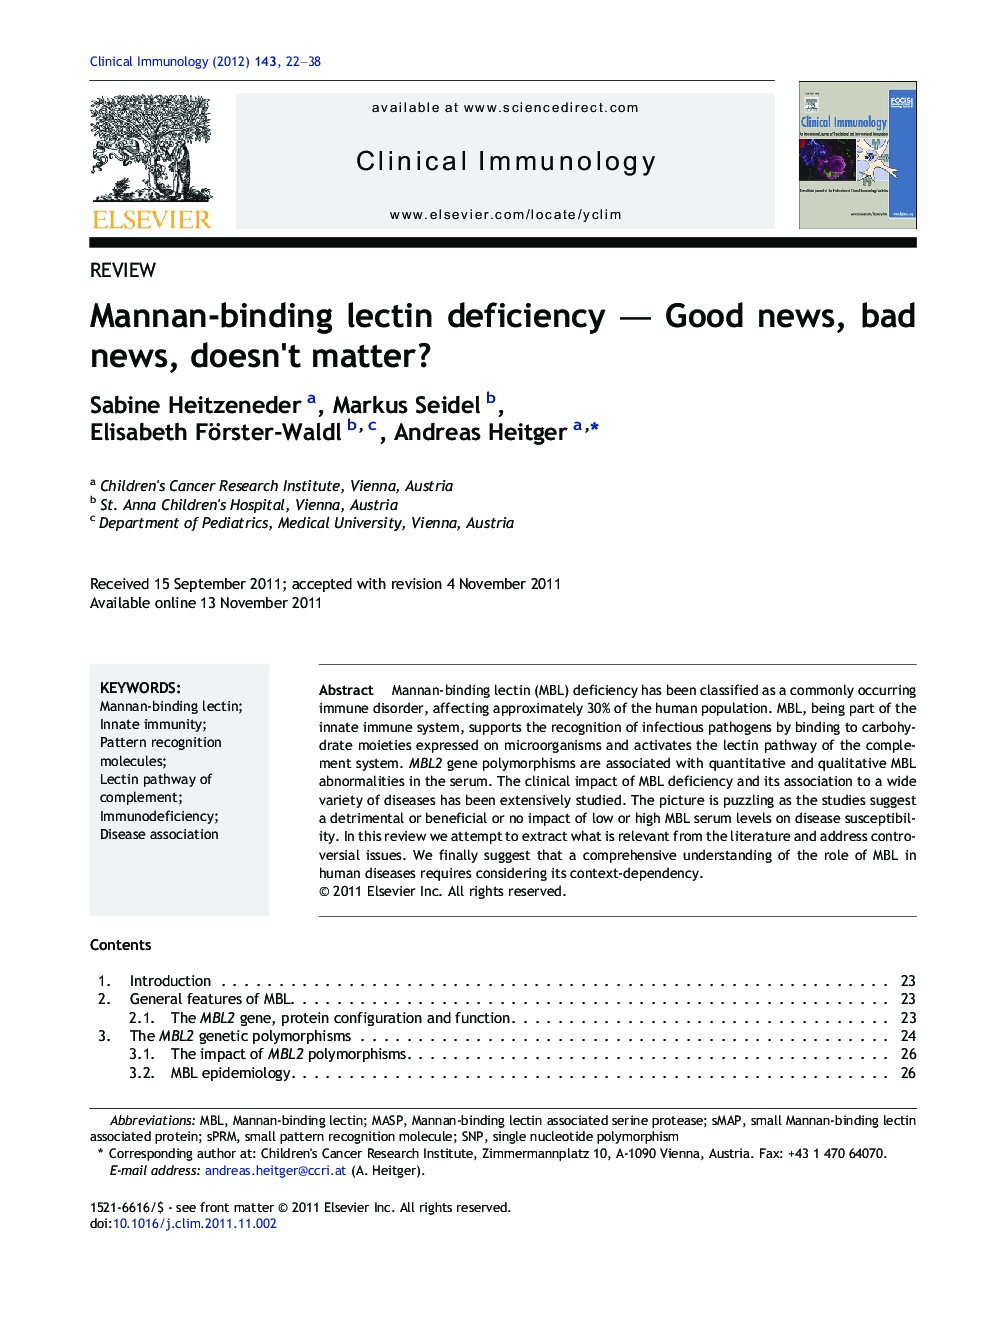 Mannan-binding lectin deficiency — Good news, bad news, doesn't matter?